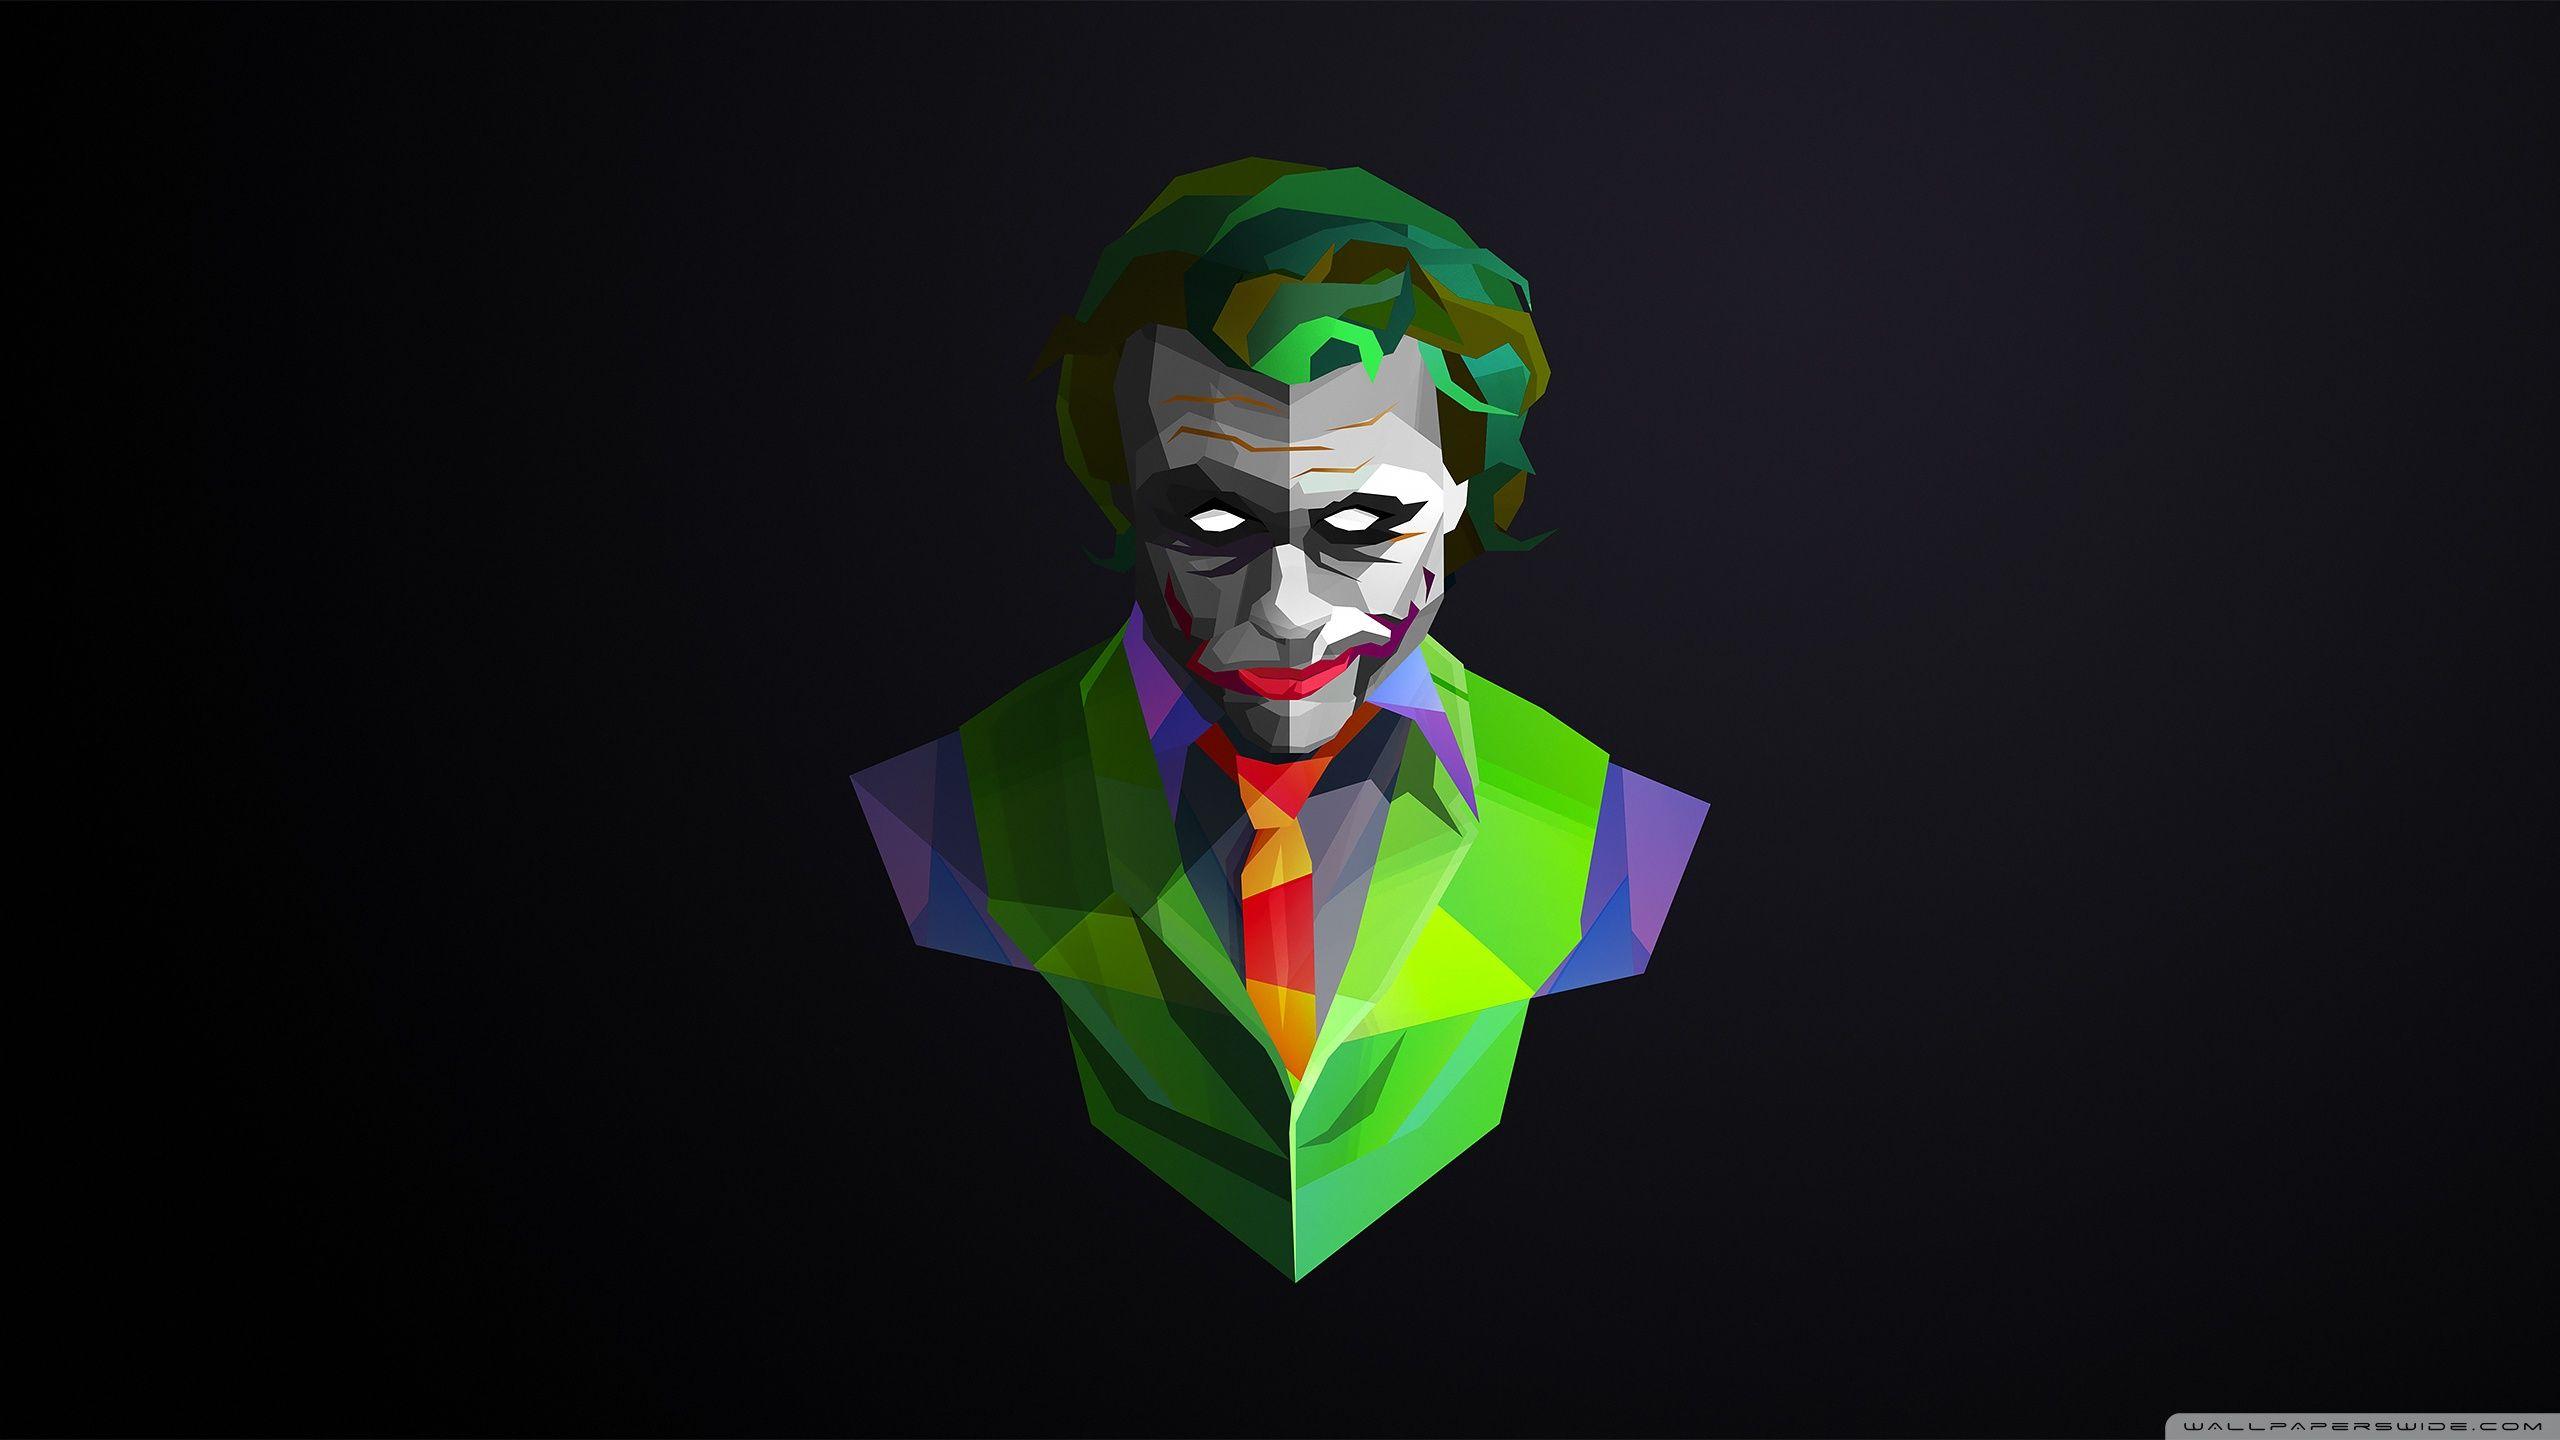 Joker DC Comics movie characters red clowns 1080P wallpaper  hdwallpaper desktop  Joker wallpapers Joker poster Joker